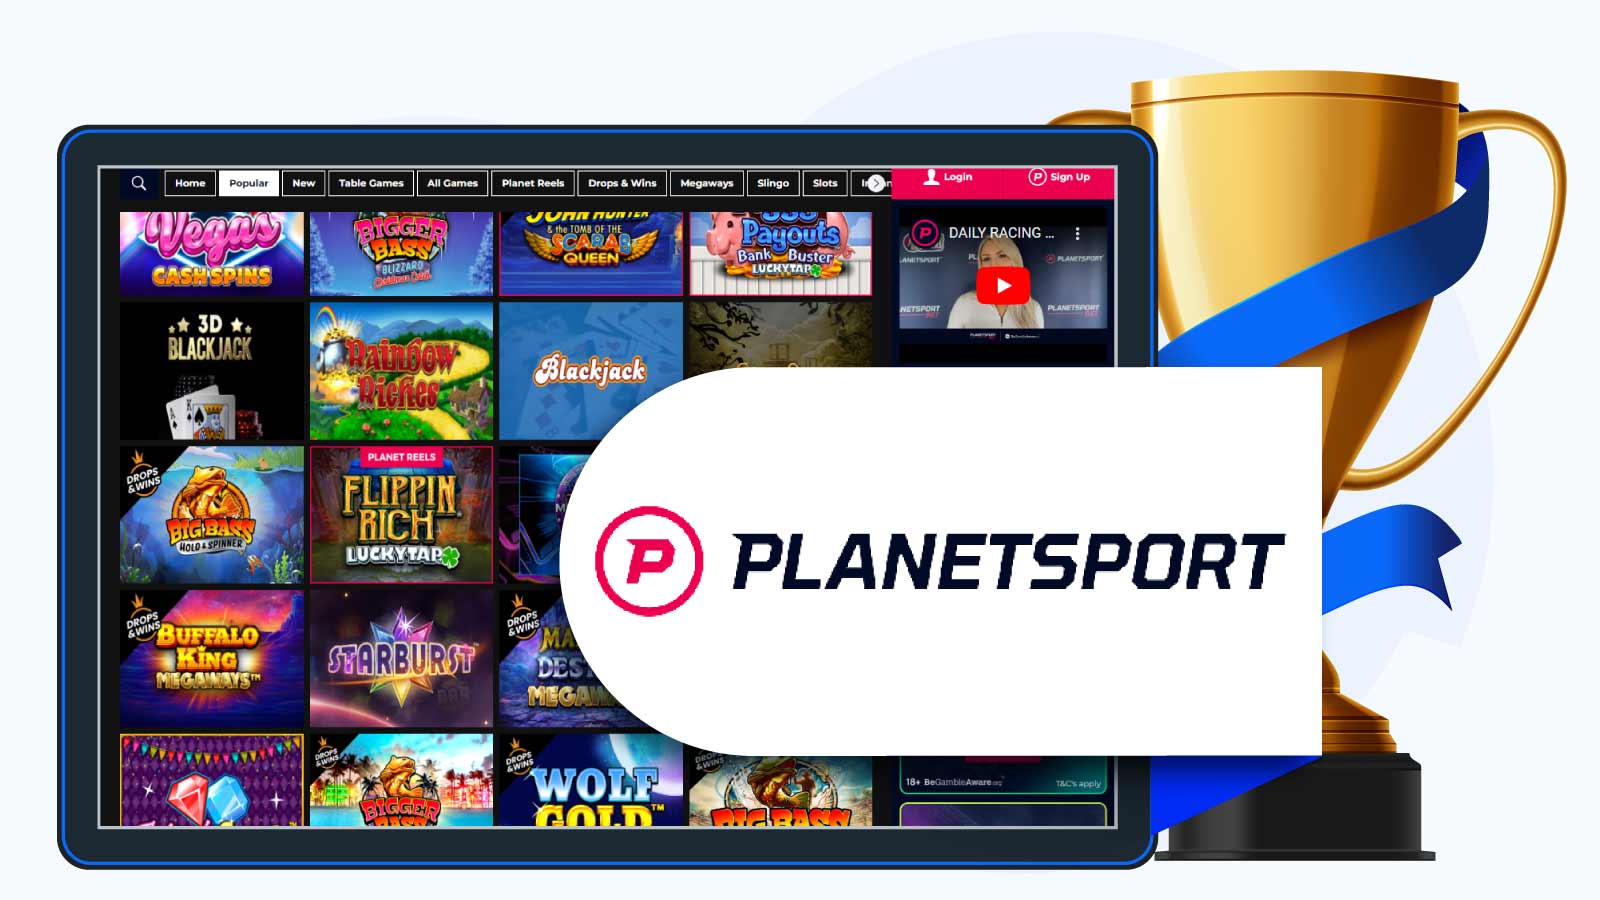 Planet Sport Bet – Deposit £20 and get 50 Starburst spins